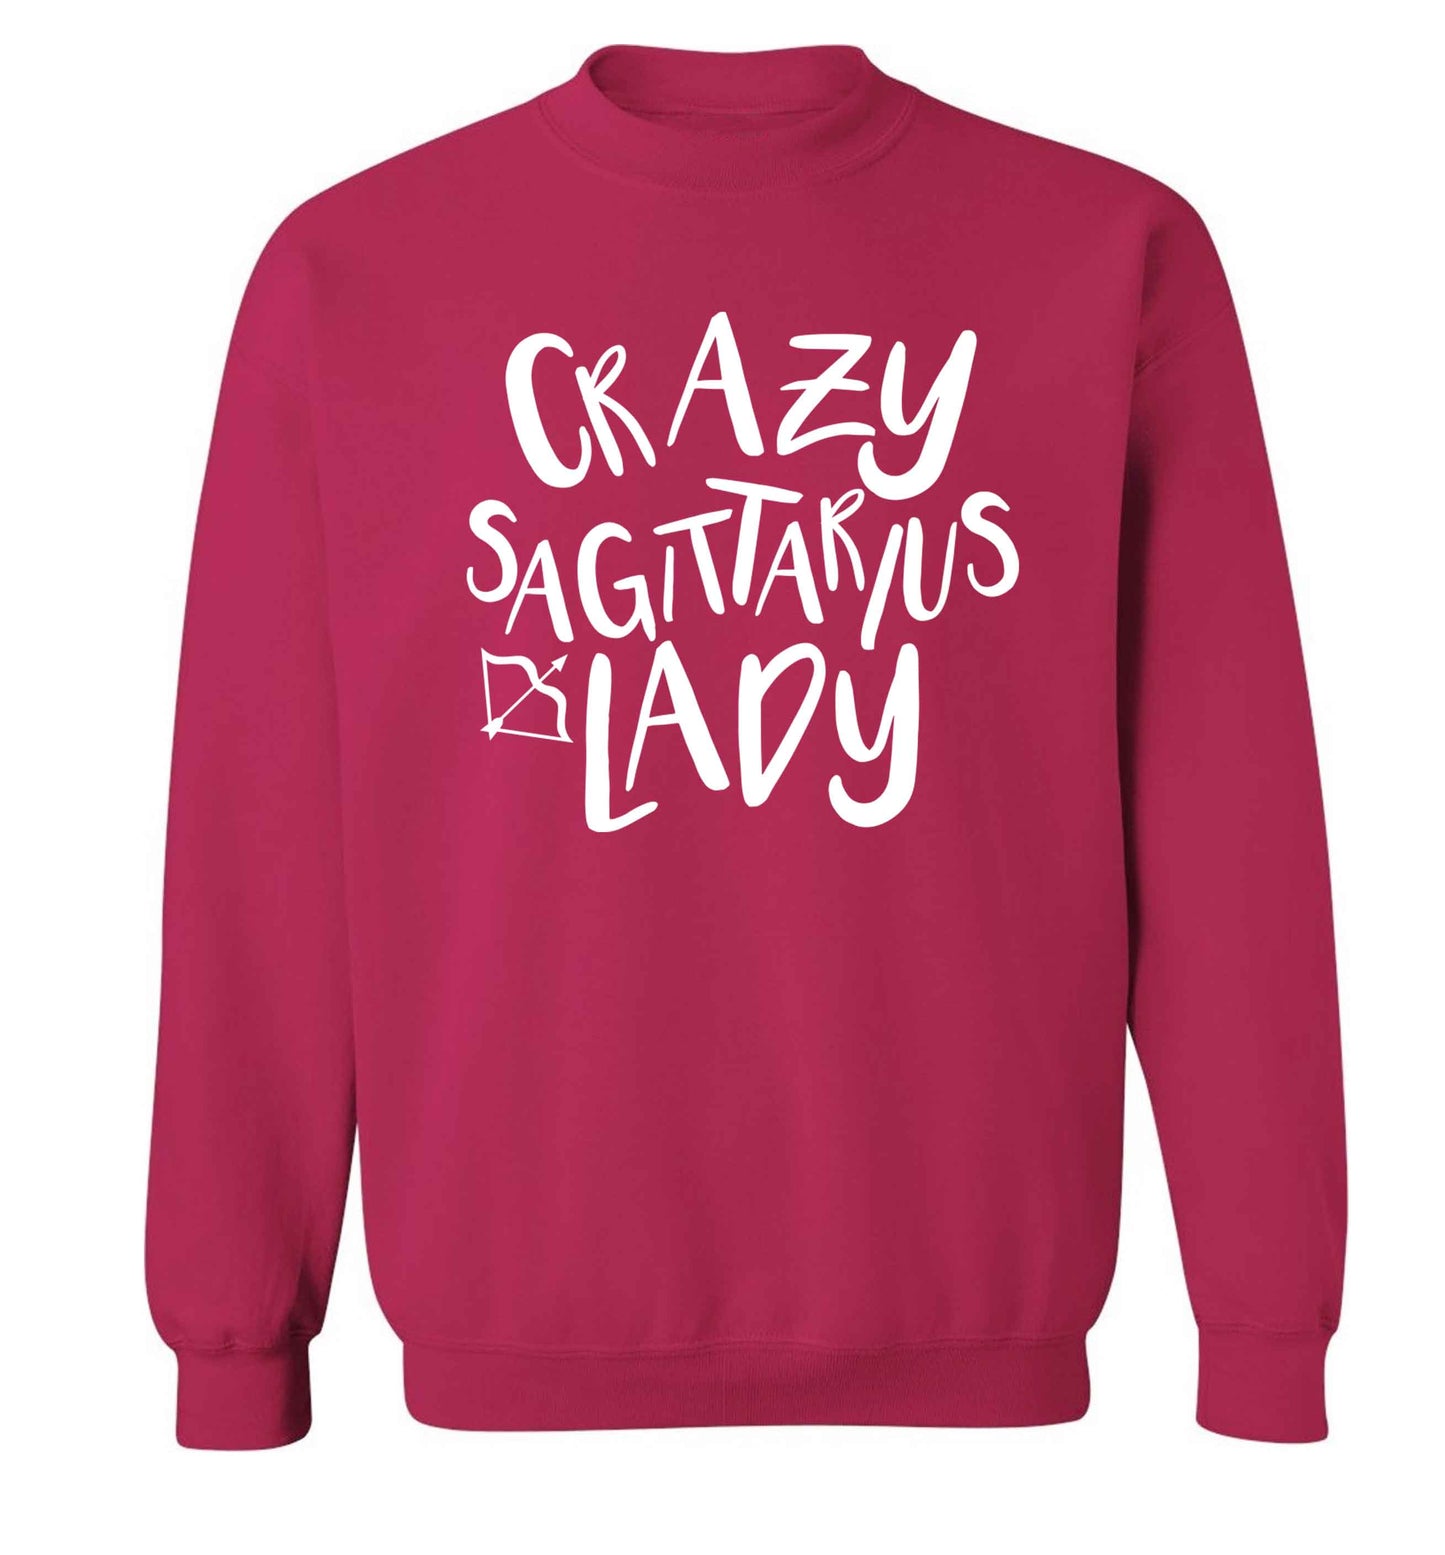 Crazy sagittarius lady Adult's unisex pink Sweater 2XL